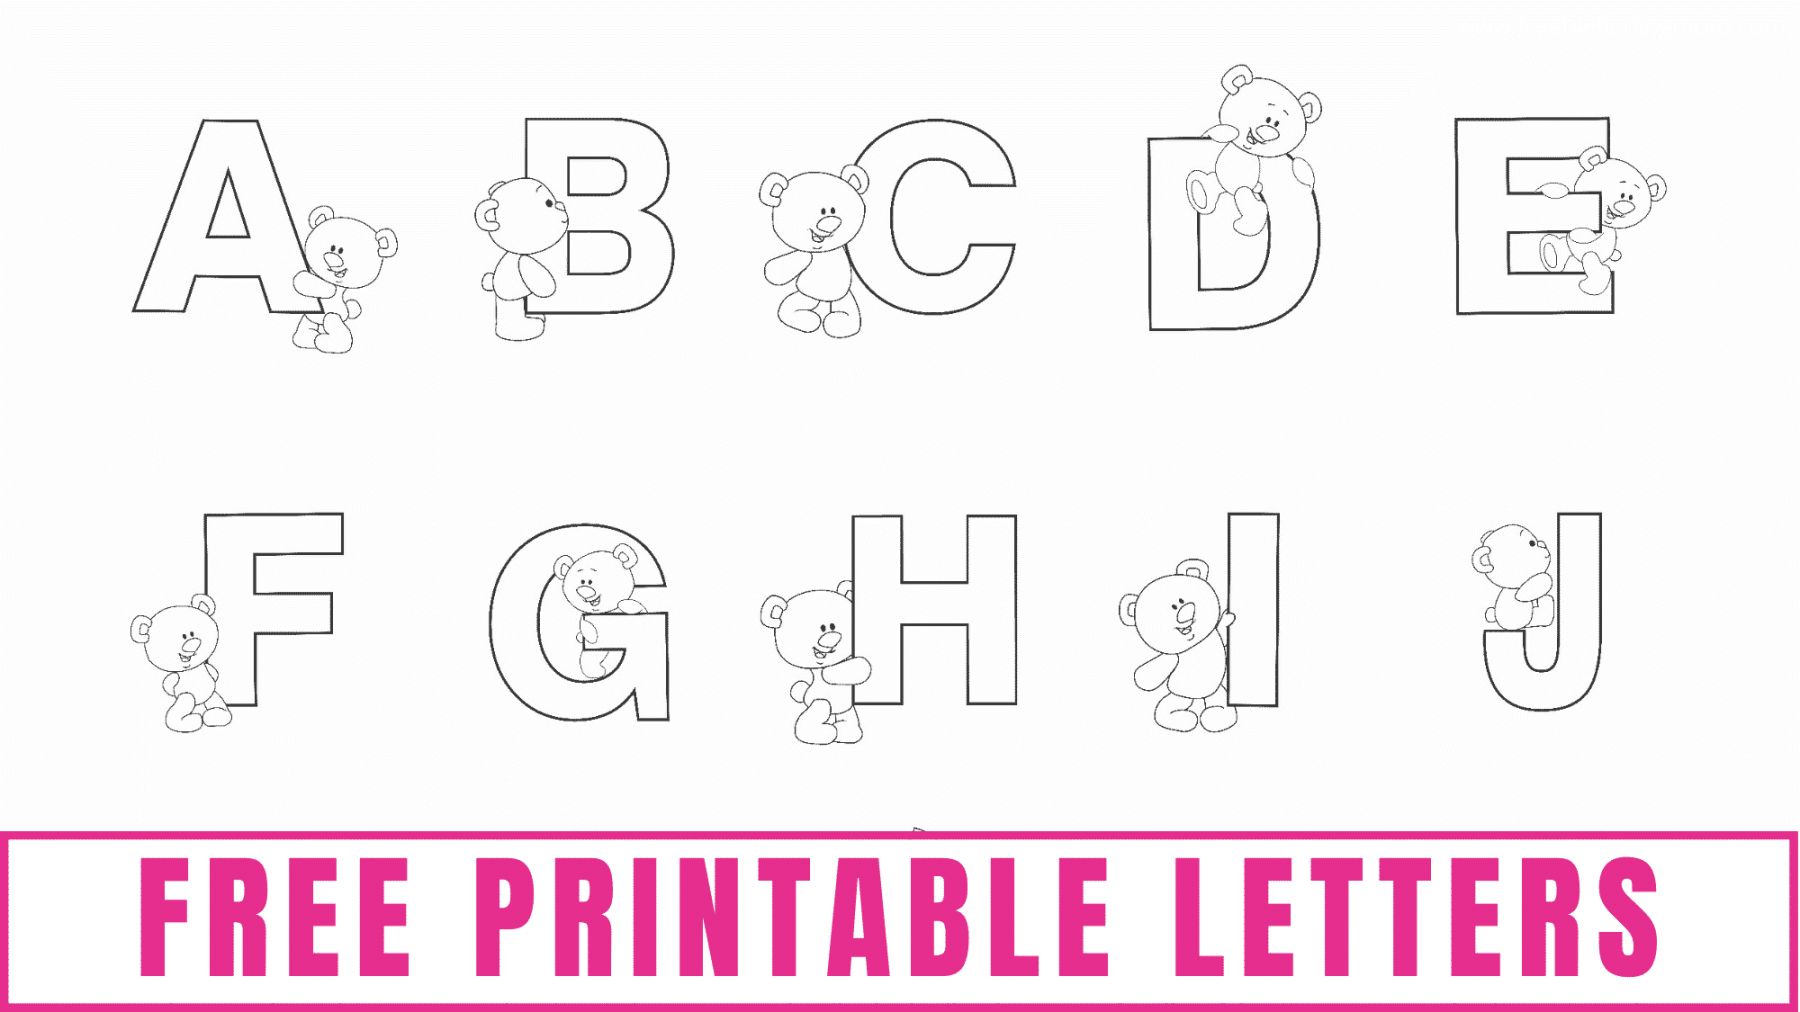 Printable Alphabet Letters Free - Printable - Free Printable Letters and Alphabet Letters - Freebie Finding Mom